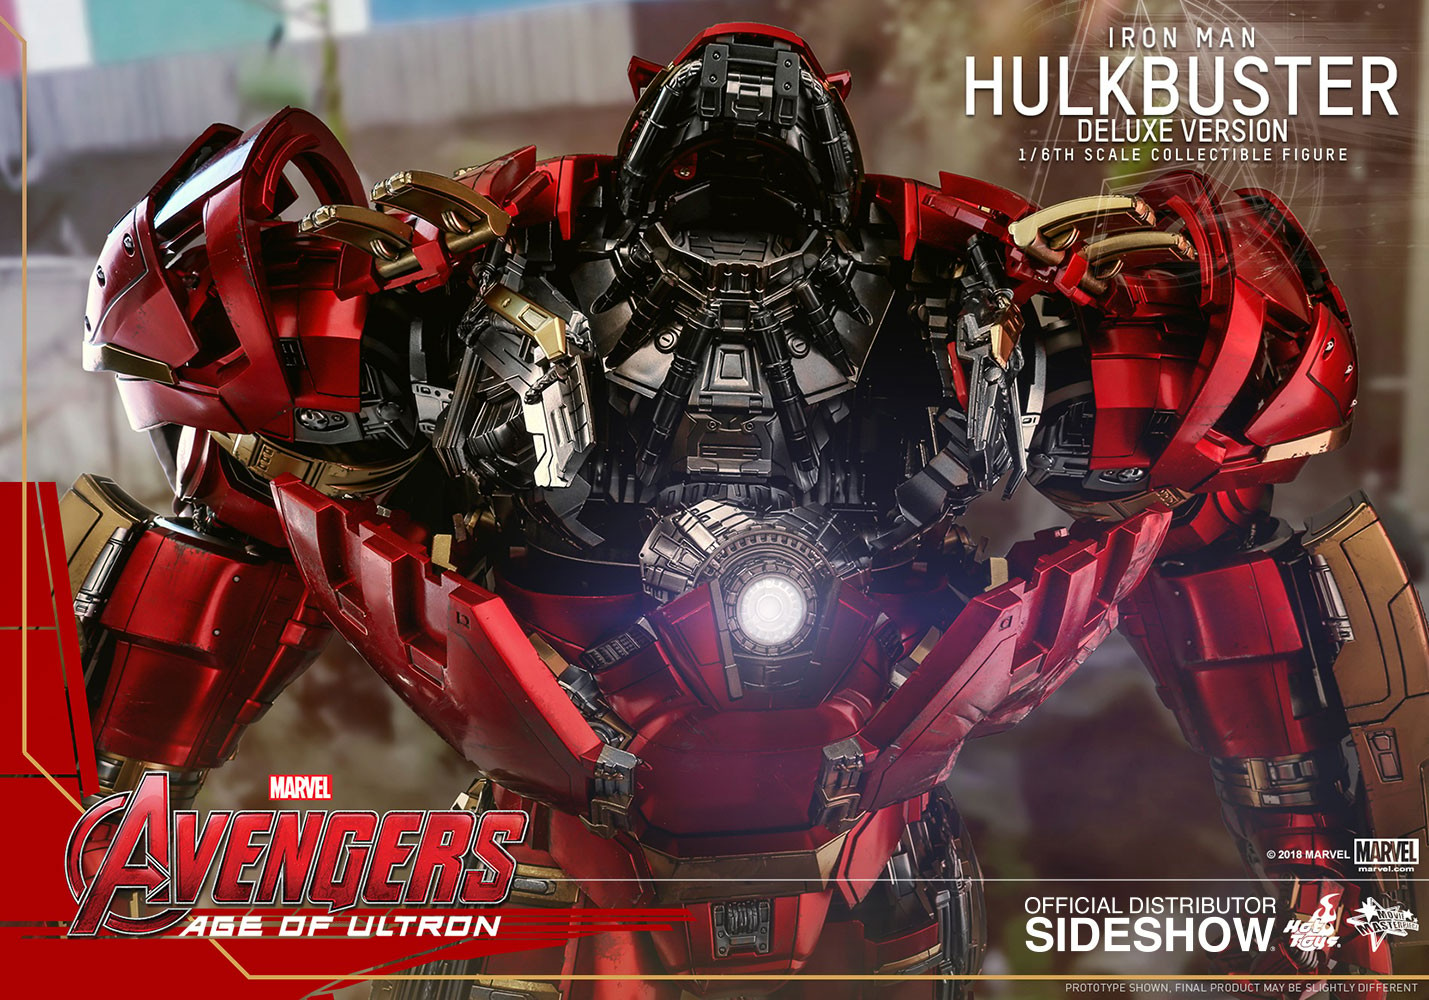 Hulkbuster Deluxe Version